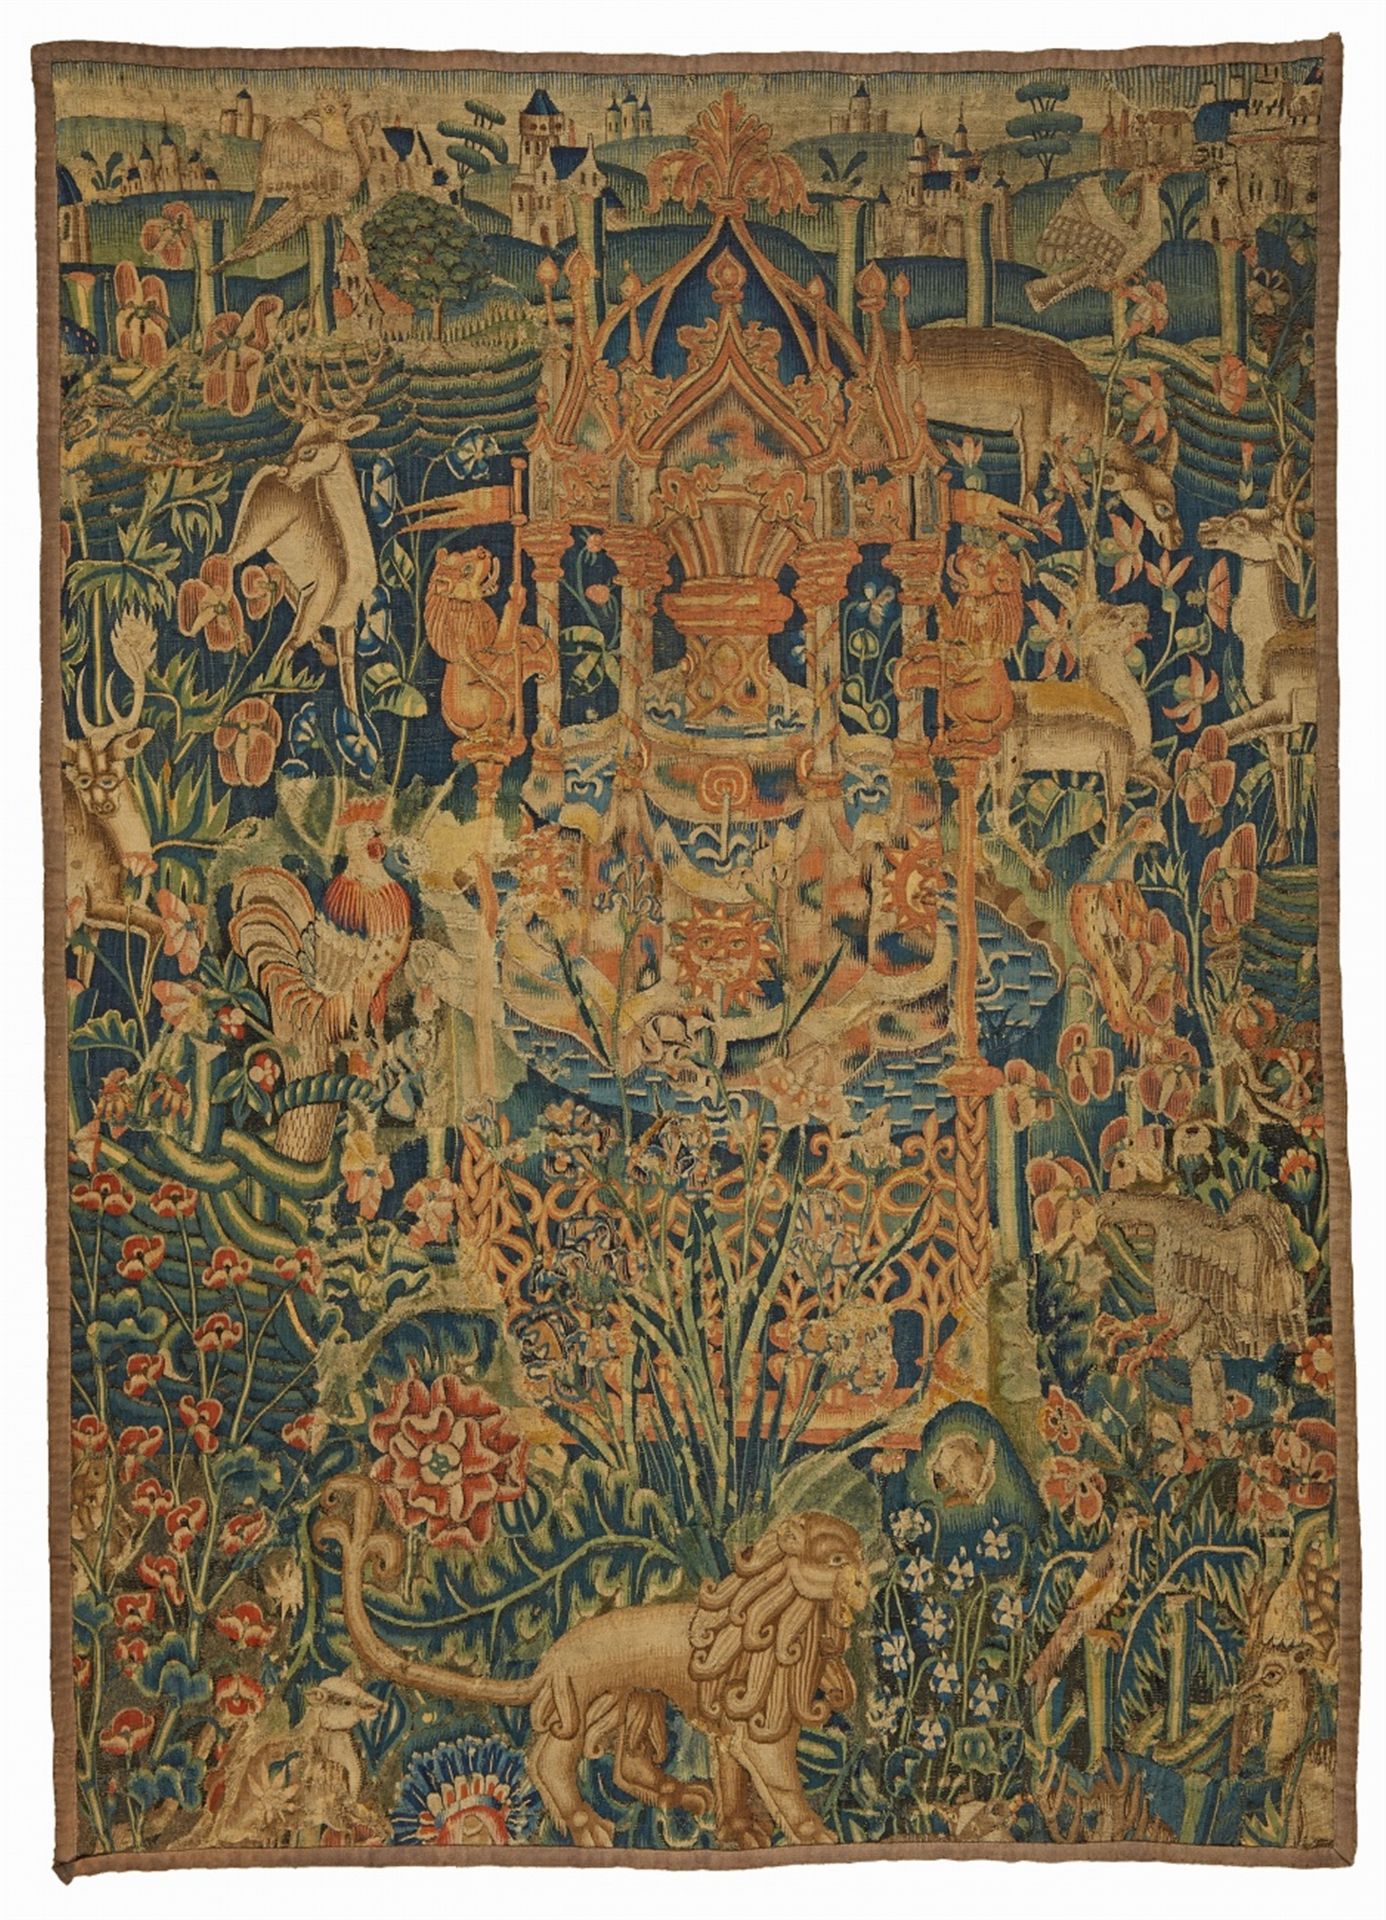 A Dutch Hortus Conclusus tapestry